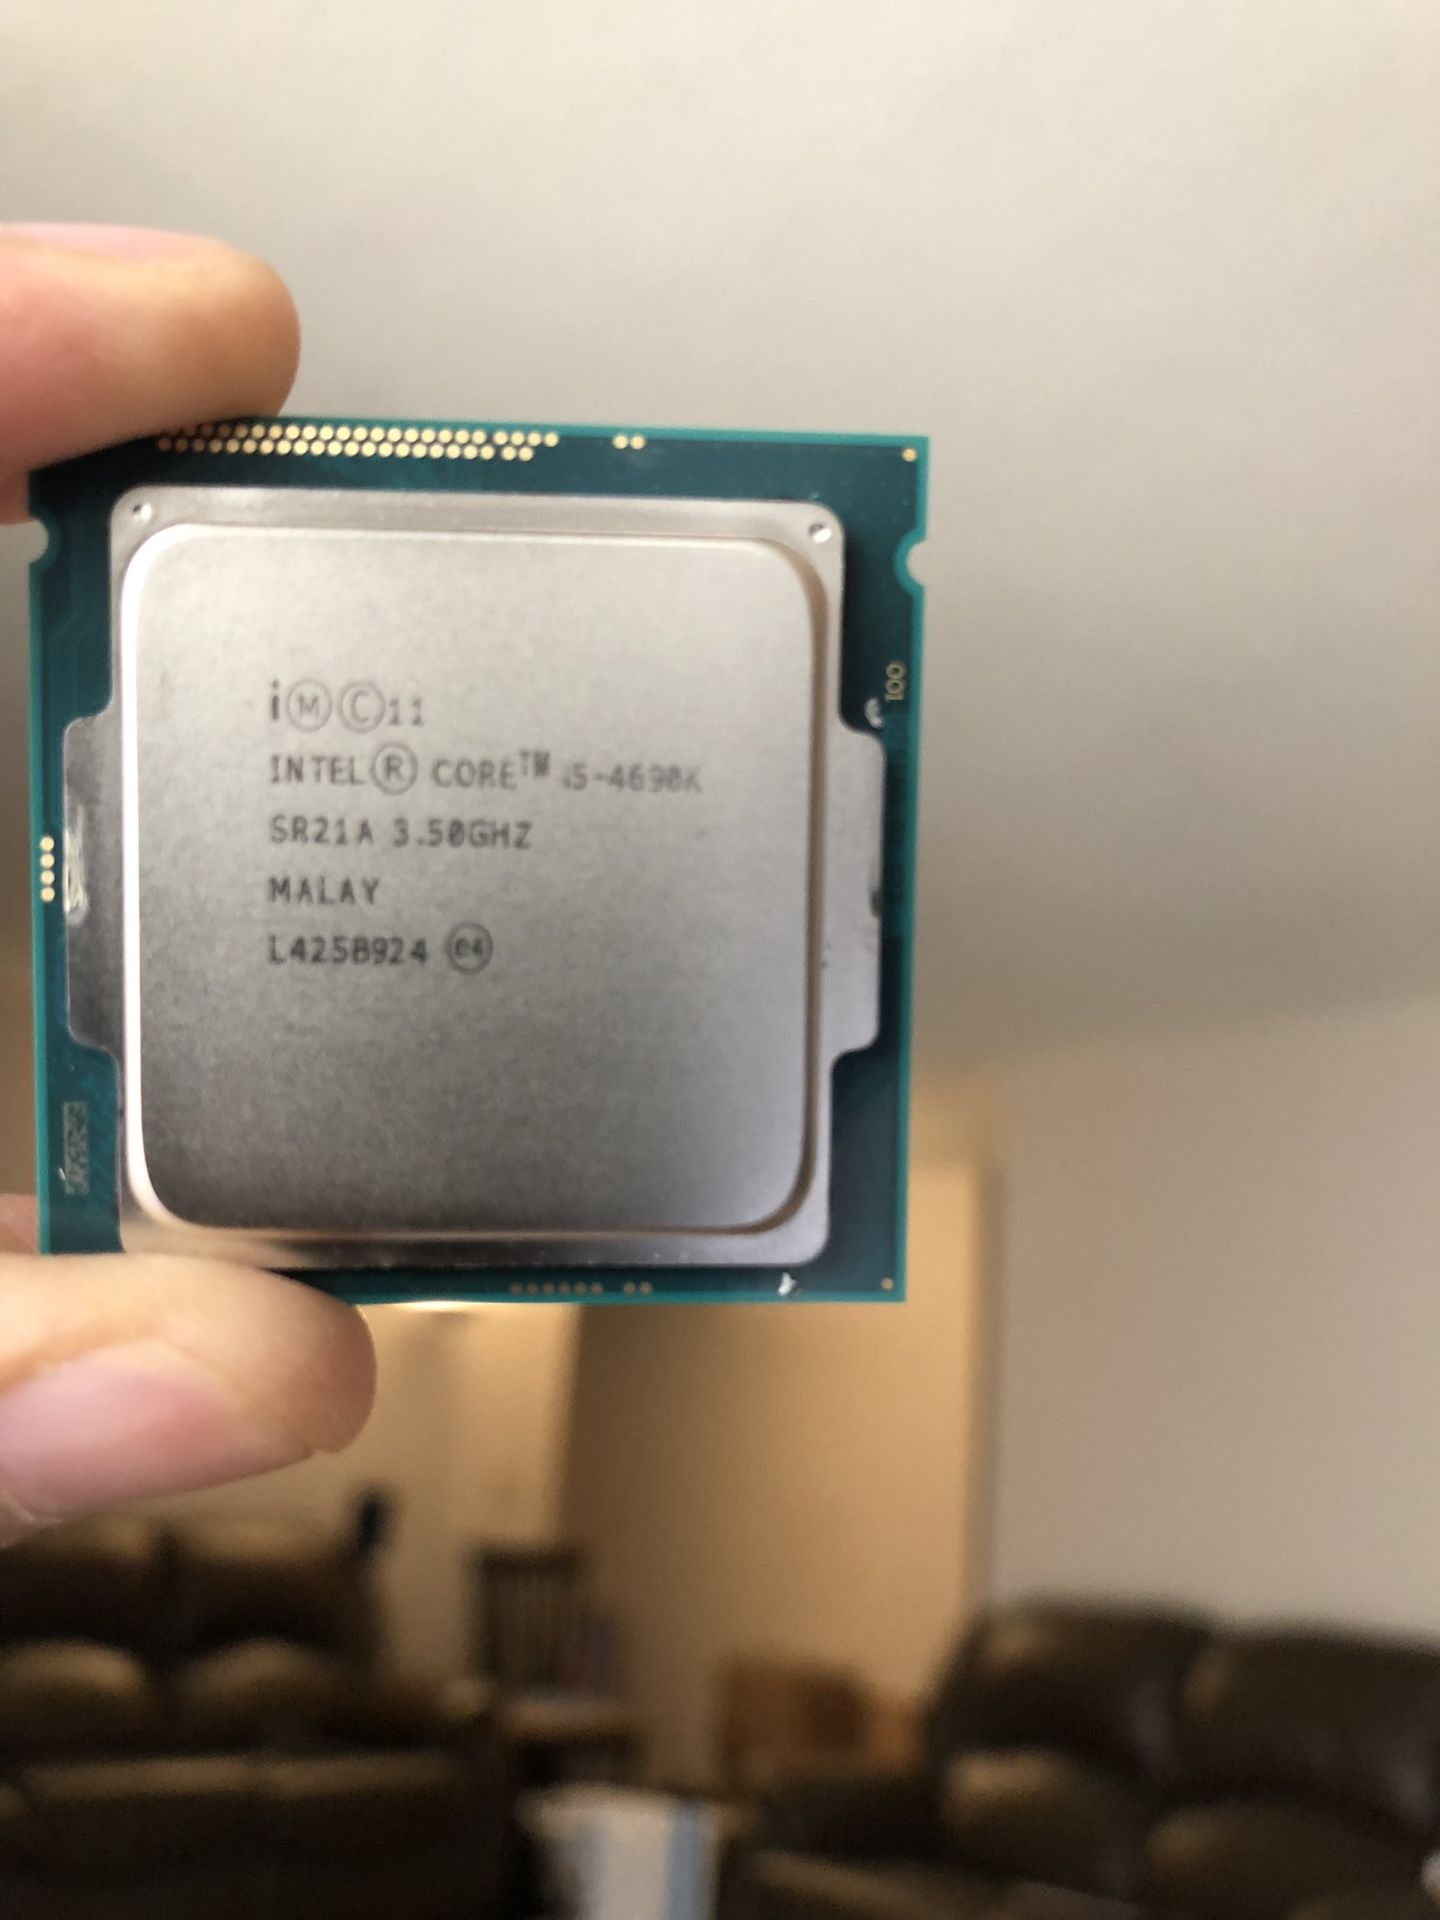 Intel processor core i5 4690K quad core